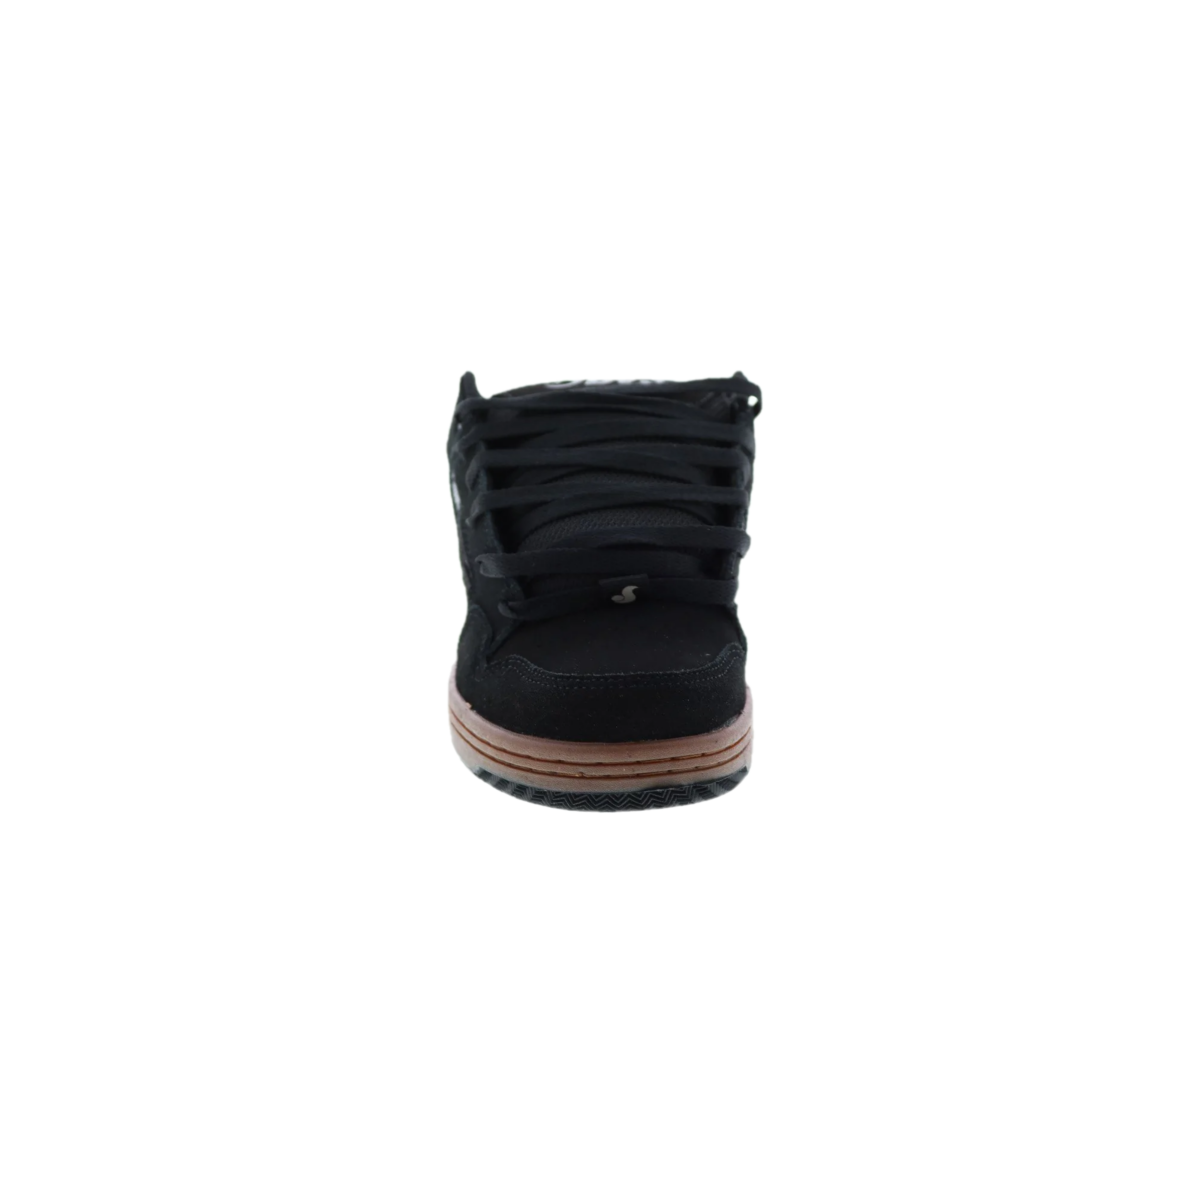 DVS F0000278019 ENDURO 125 MN'S (Medium) Black/Gum Leather & Mesh Skate Shoes